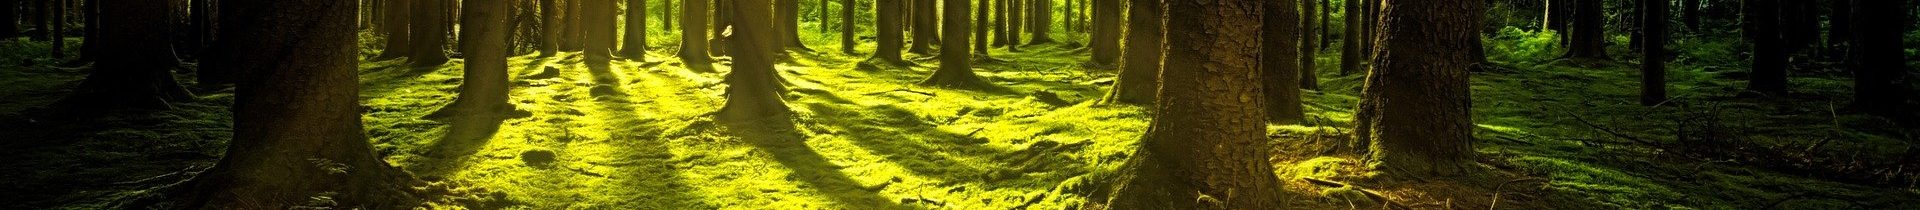 Unser Wald.